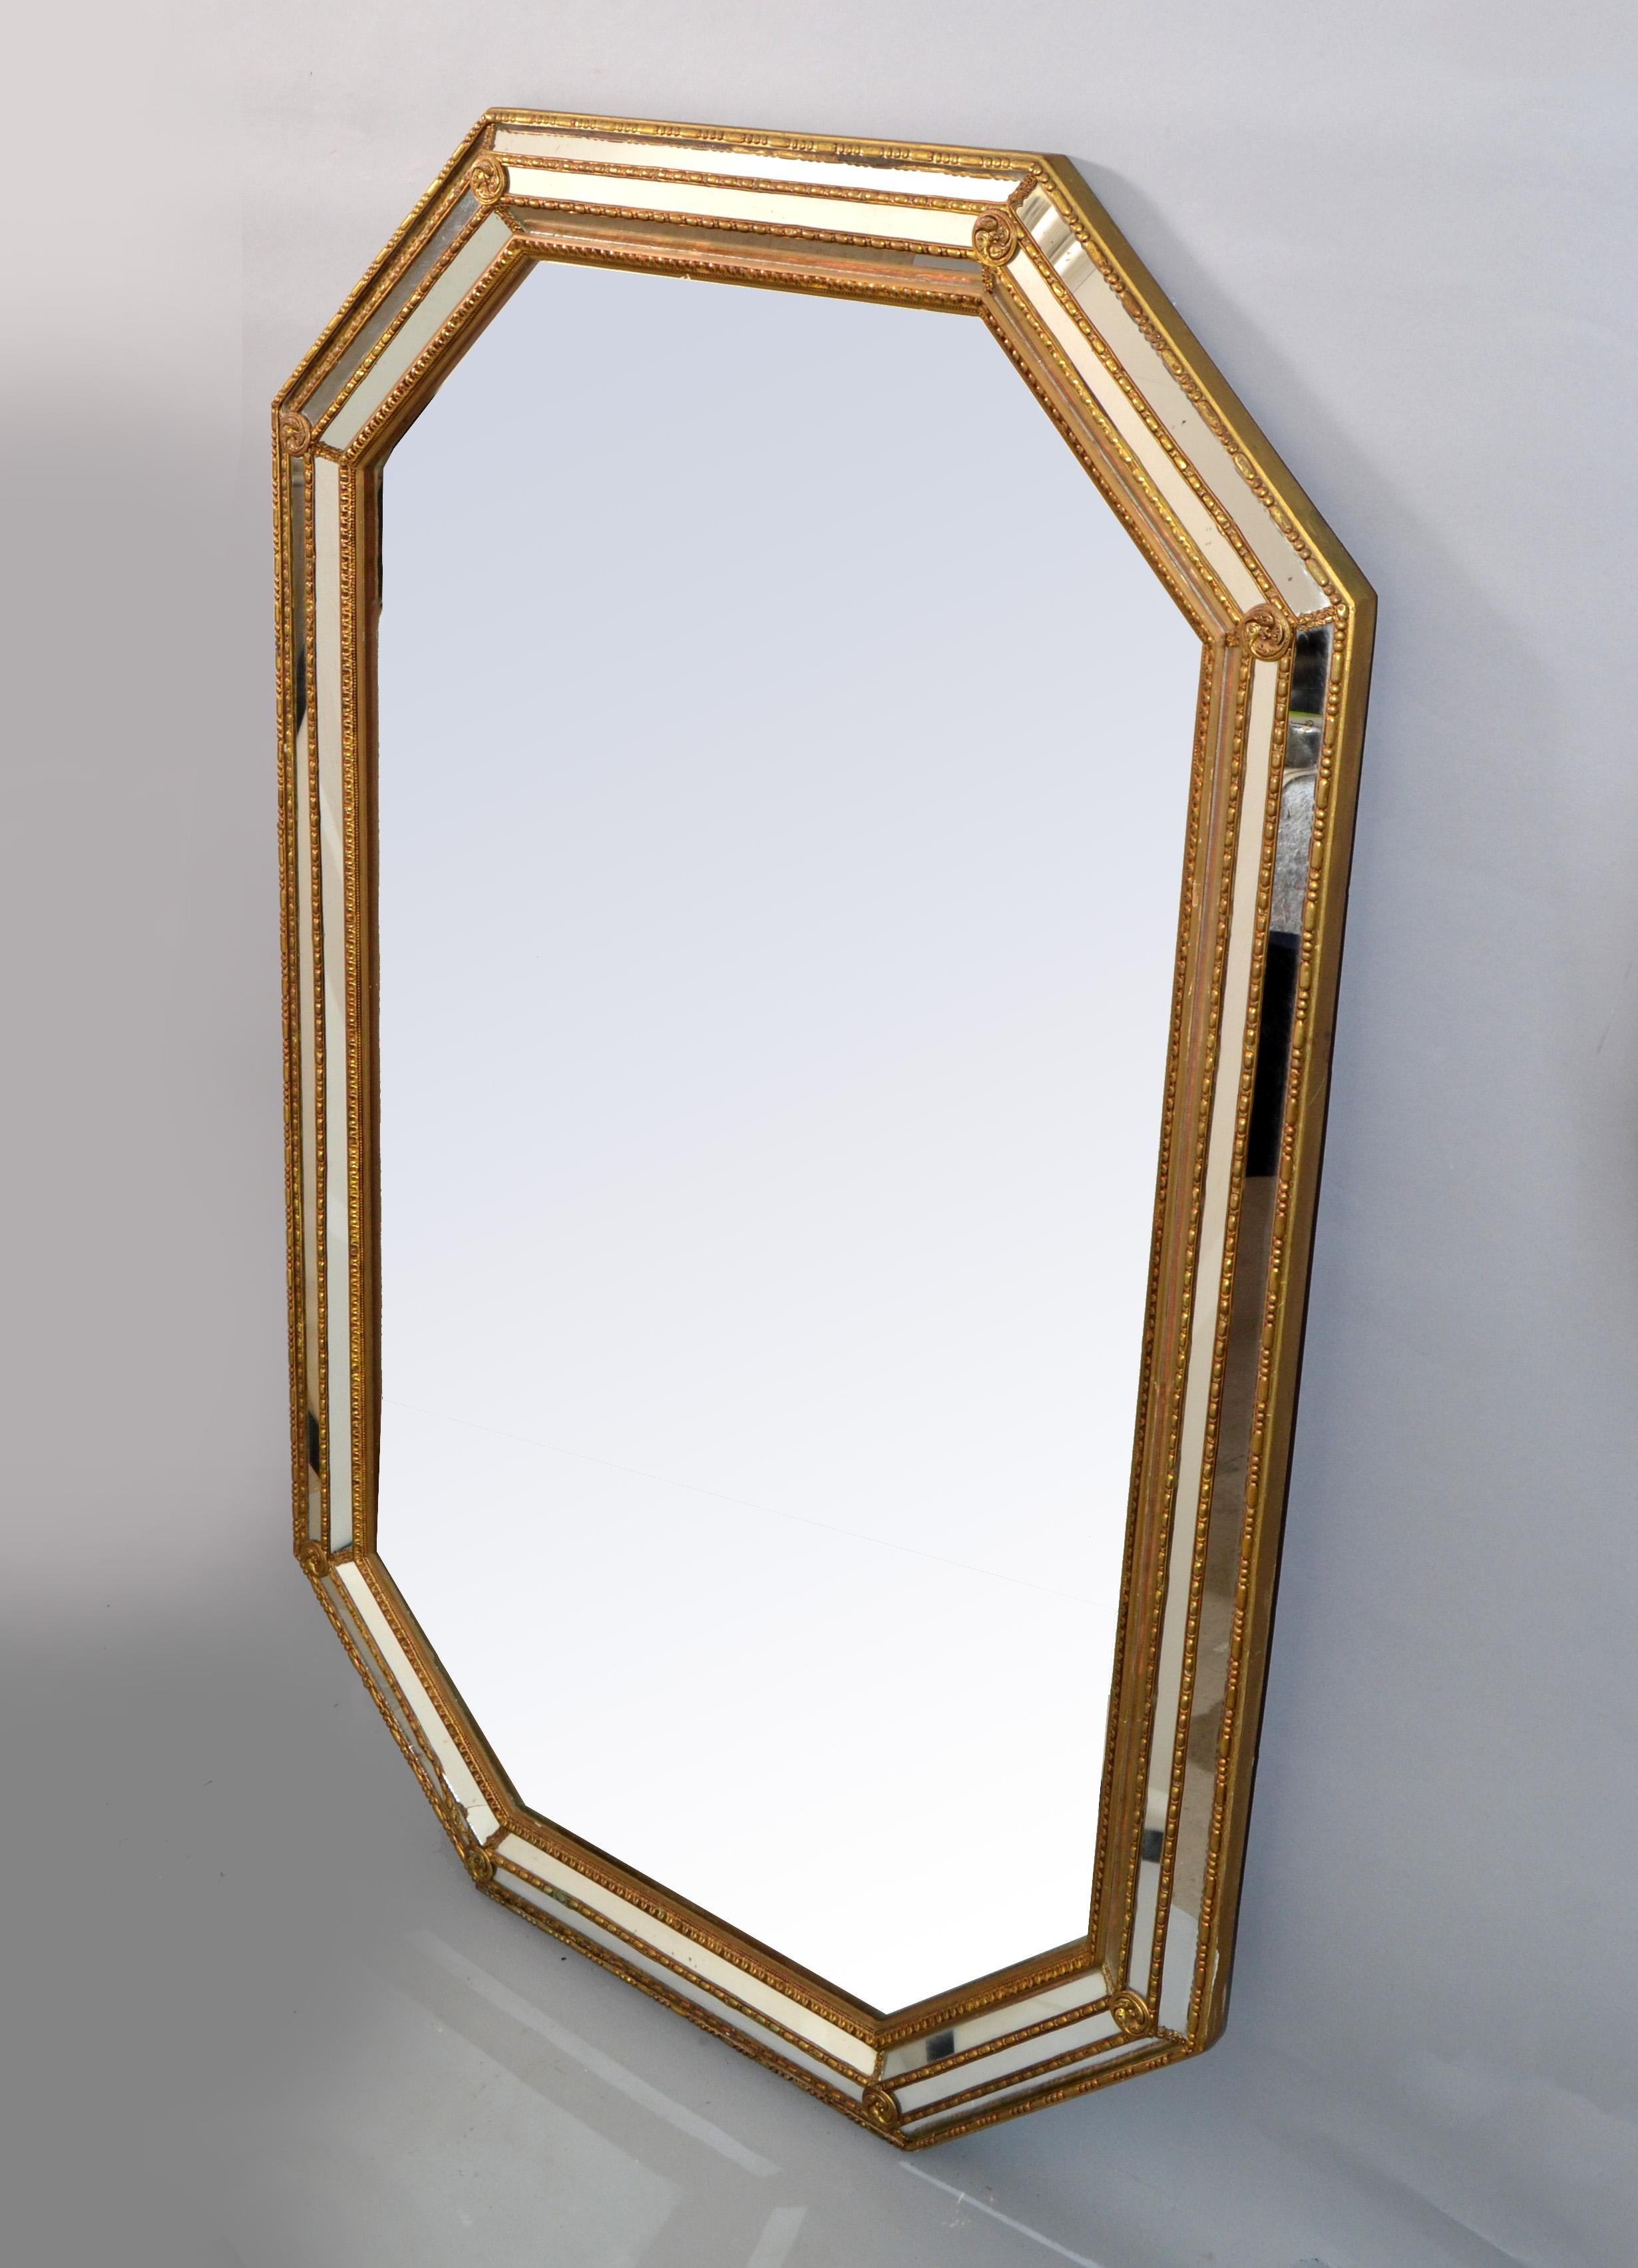 20th Century Venetian Hexagonal Wall Mirror Gilt Wood & Bohemian Ornaments 1930 Italy For Sale